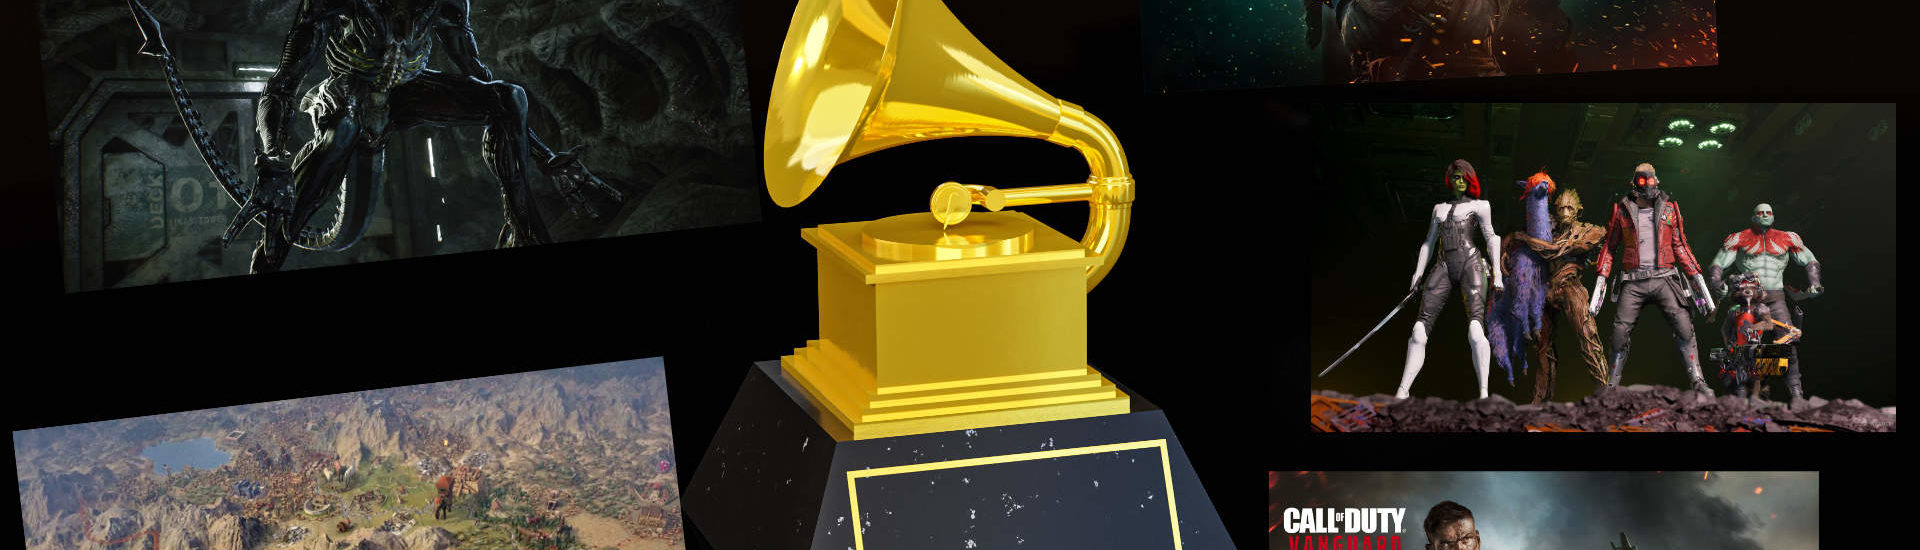 Grammy Awards küren Videospiel-Soundtrack